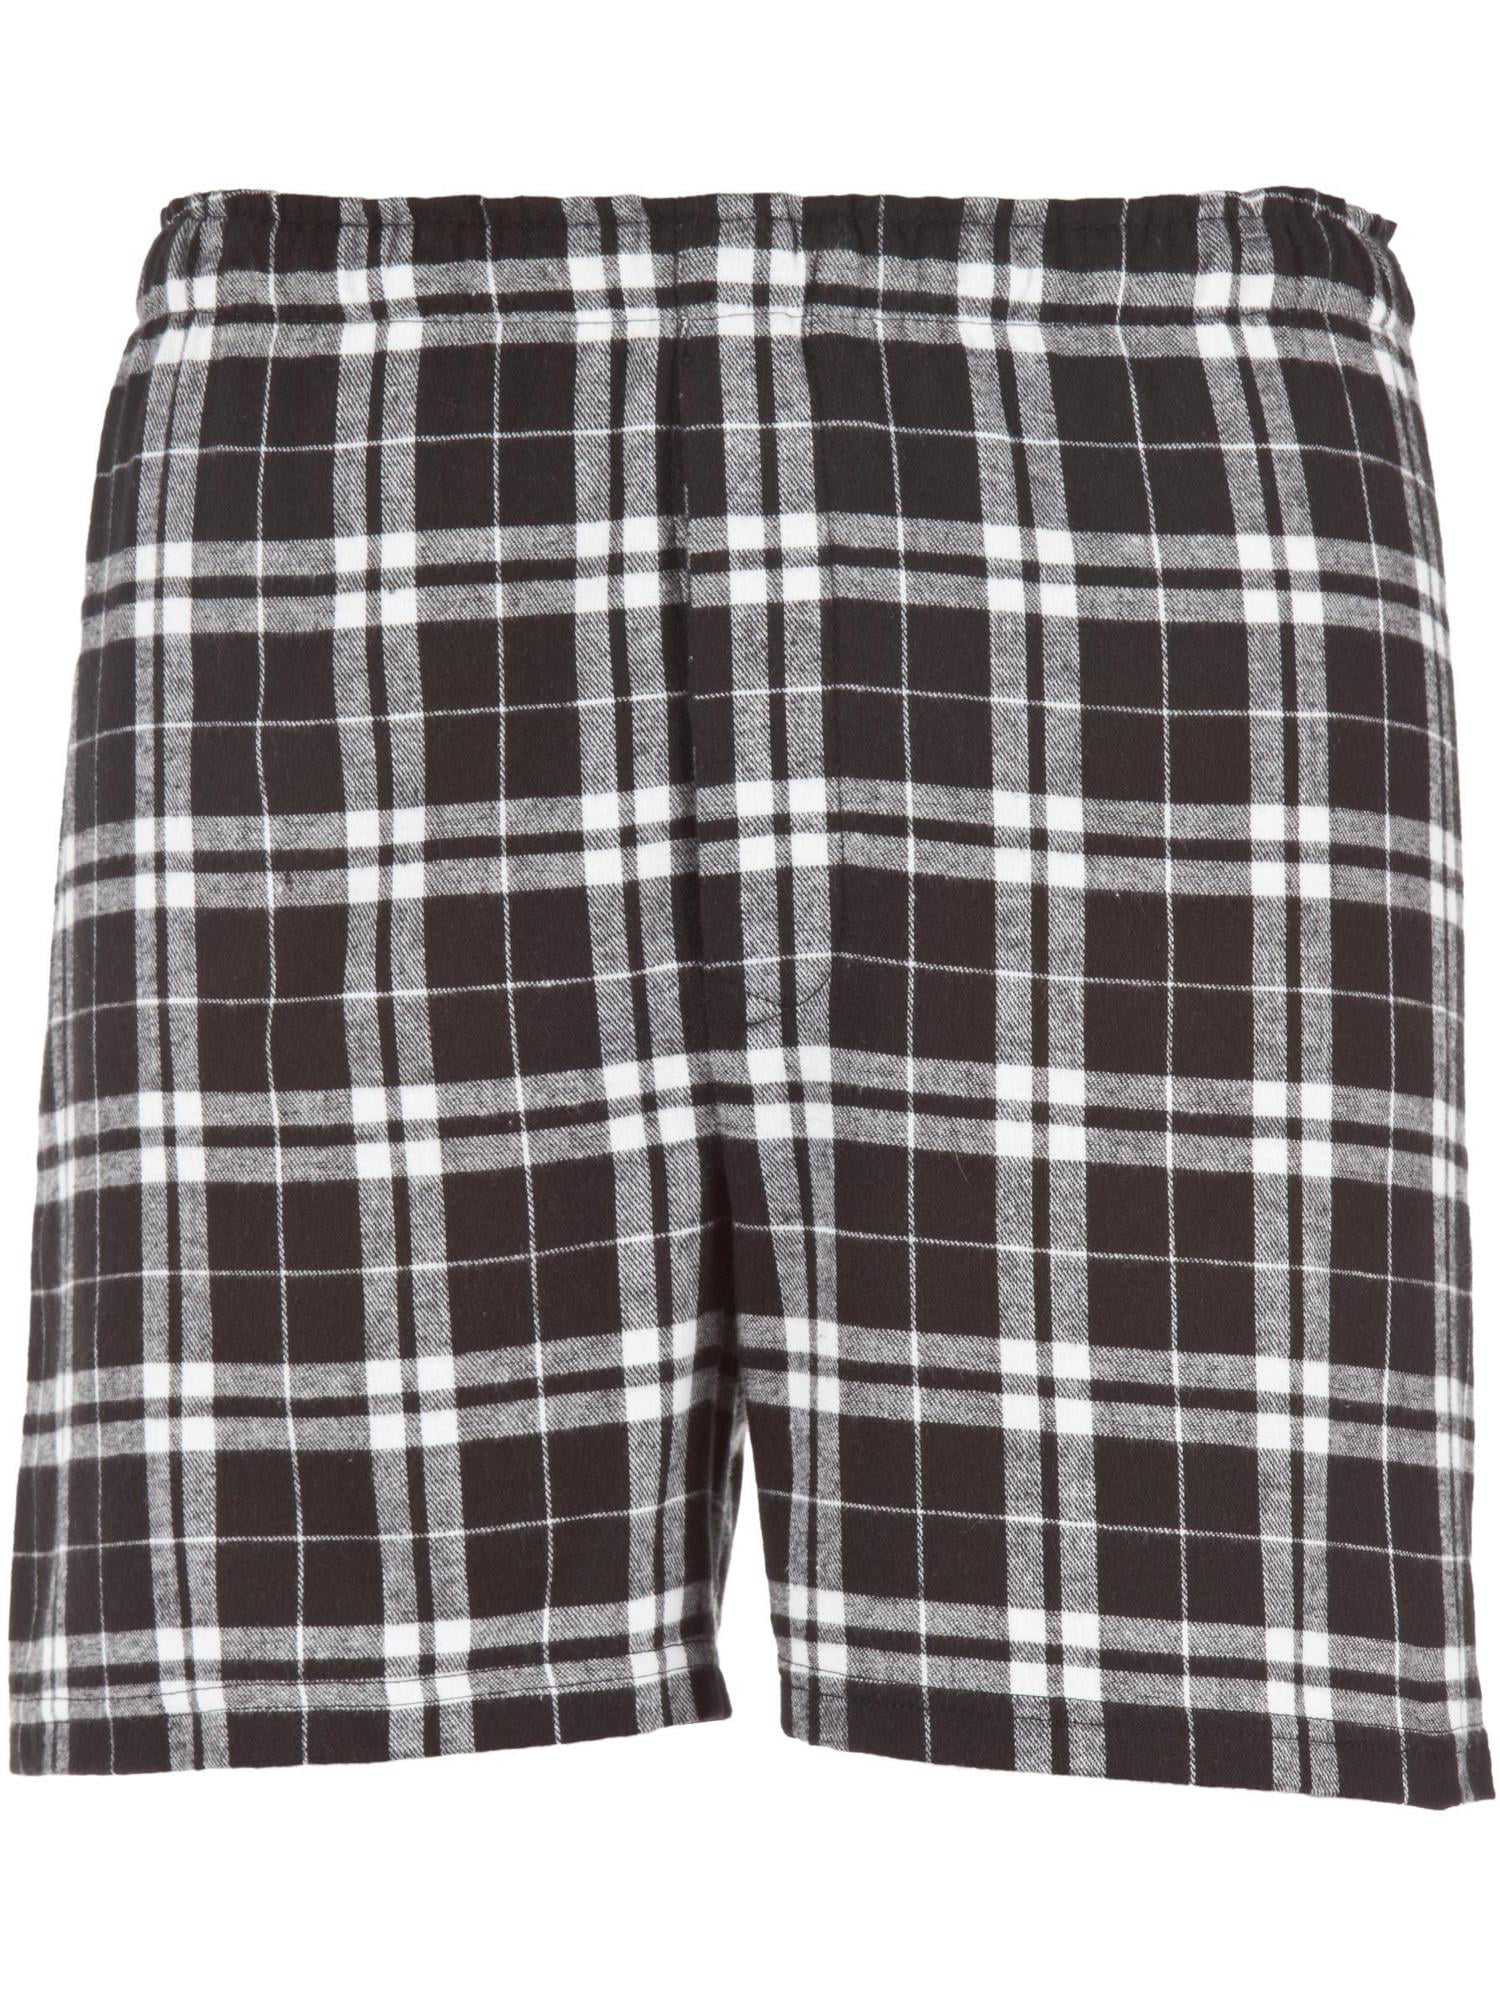 Size Medium Mens Cotton Flannel Plaid Boxer Sleep Shorts, Black and ...